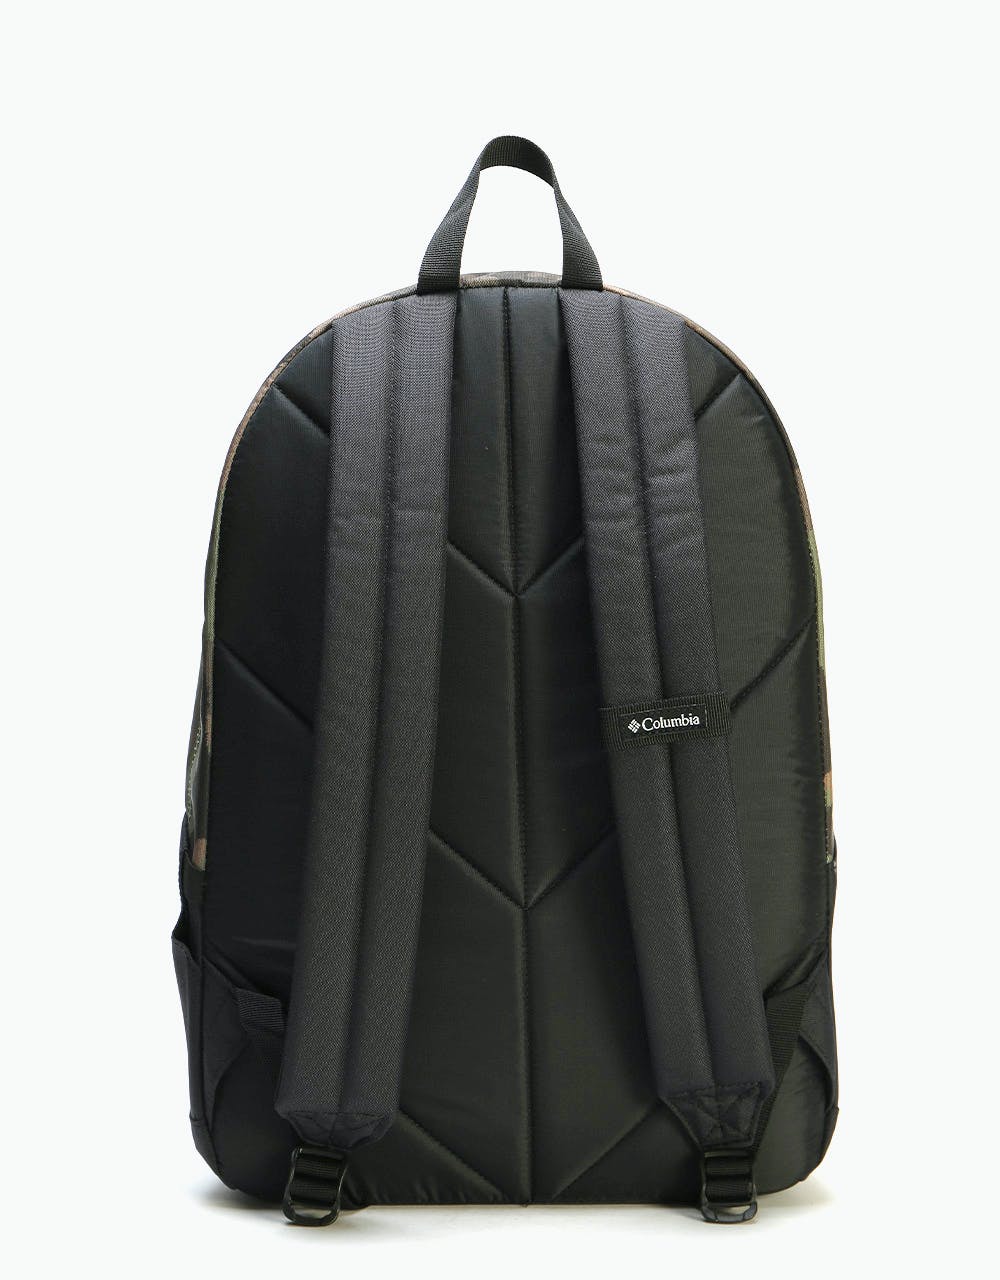 Columbia Zigzag 22L Backpack - Cypress Camo/Black